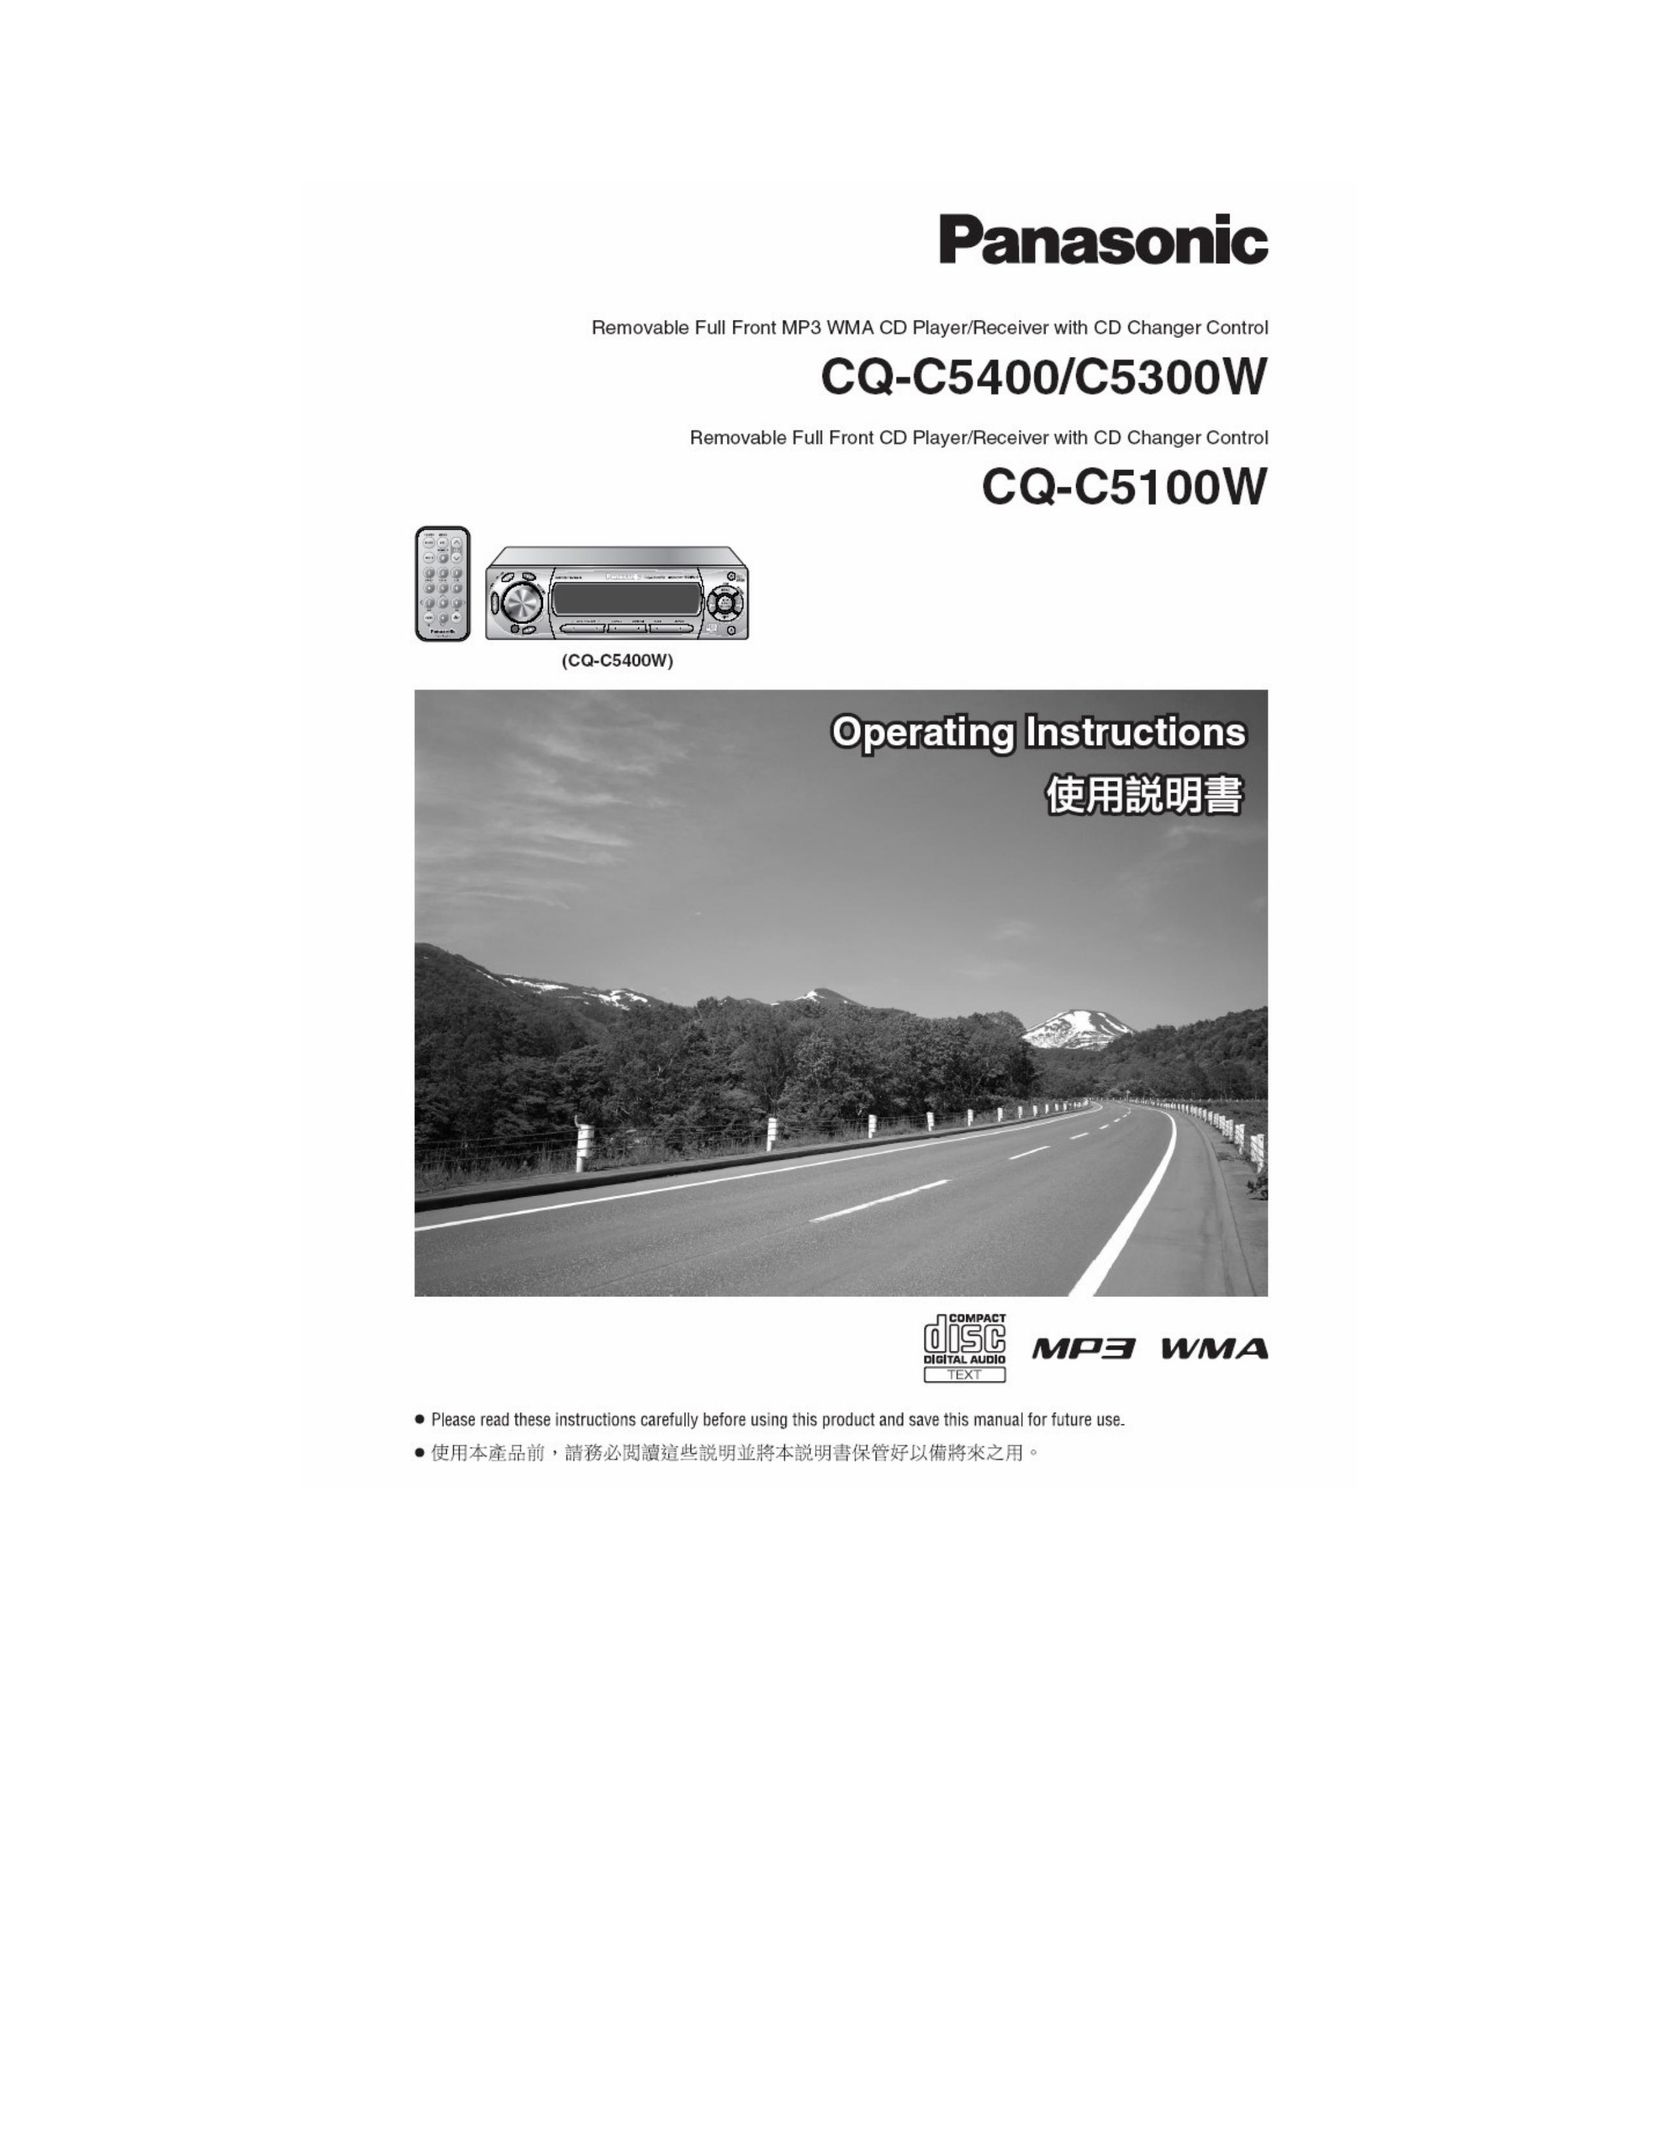 Panasonic CQ-C5300W Portable CD Player User Manual